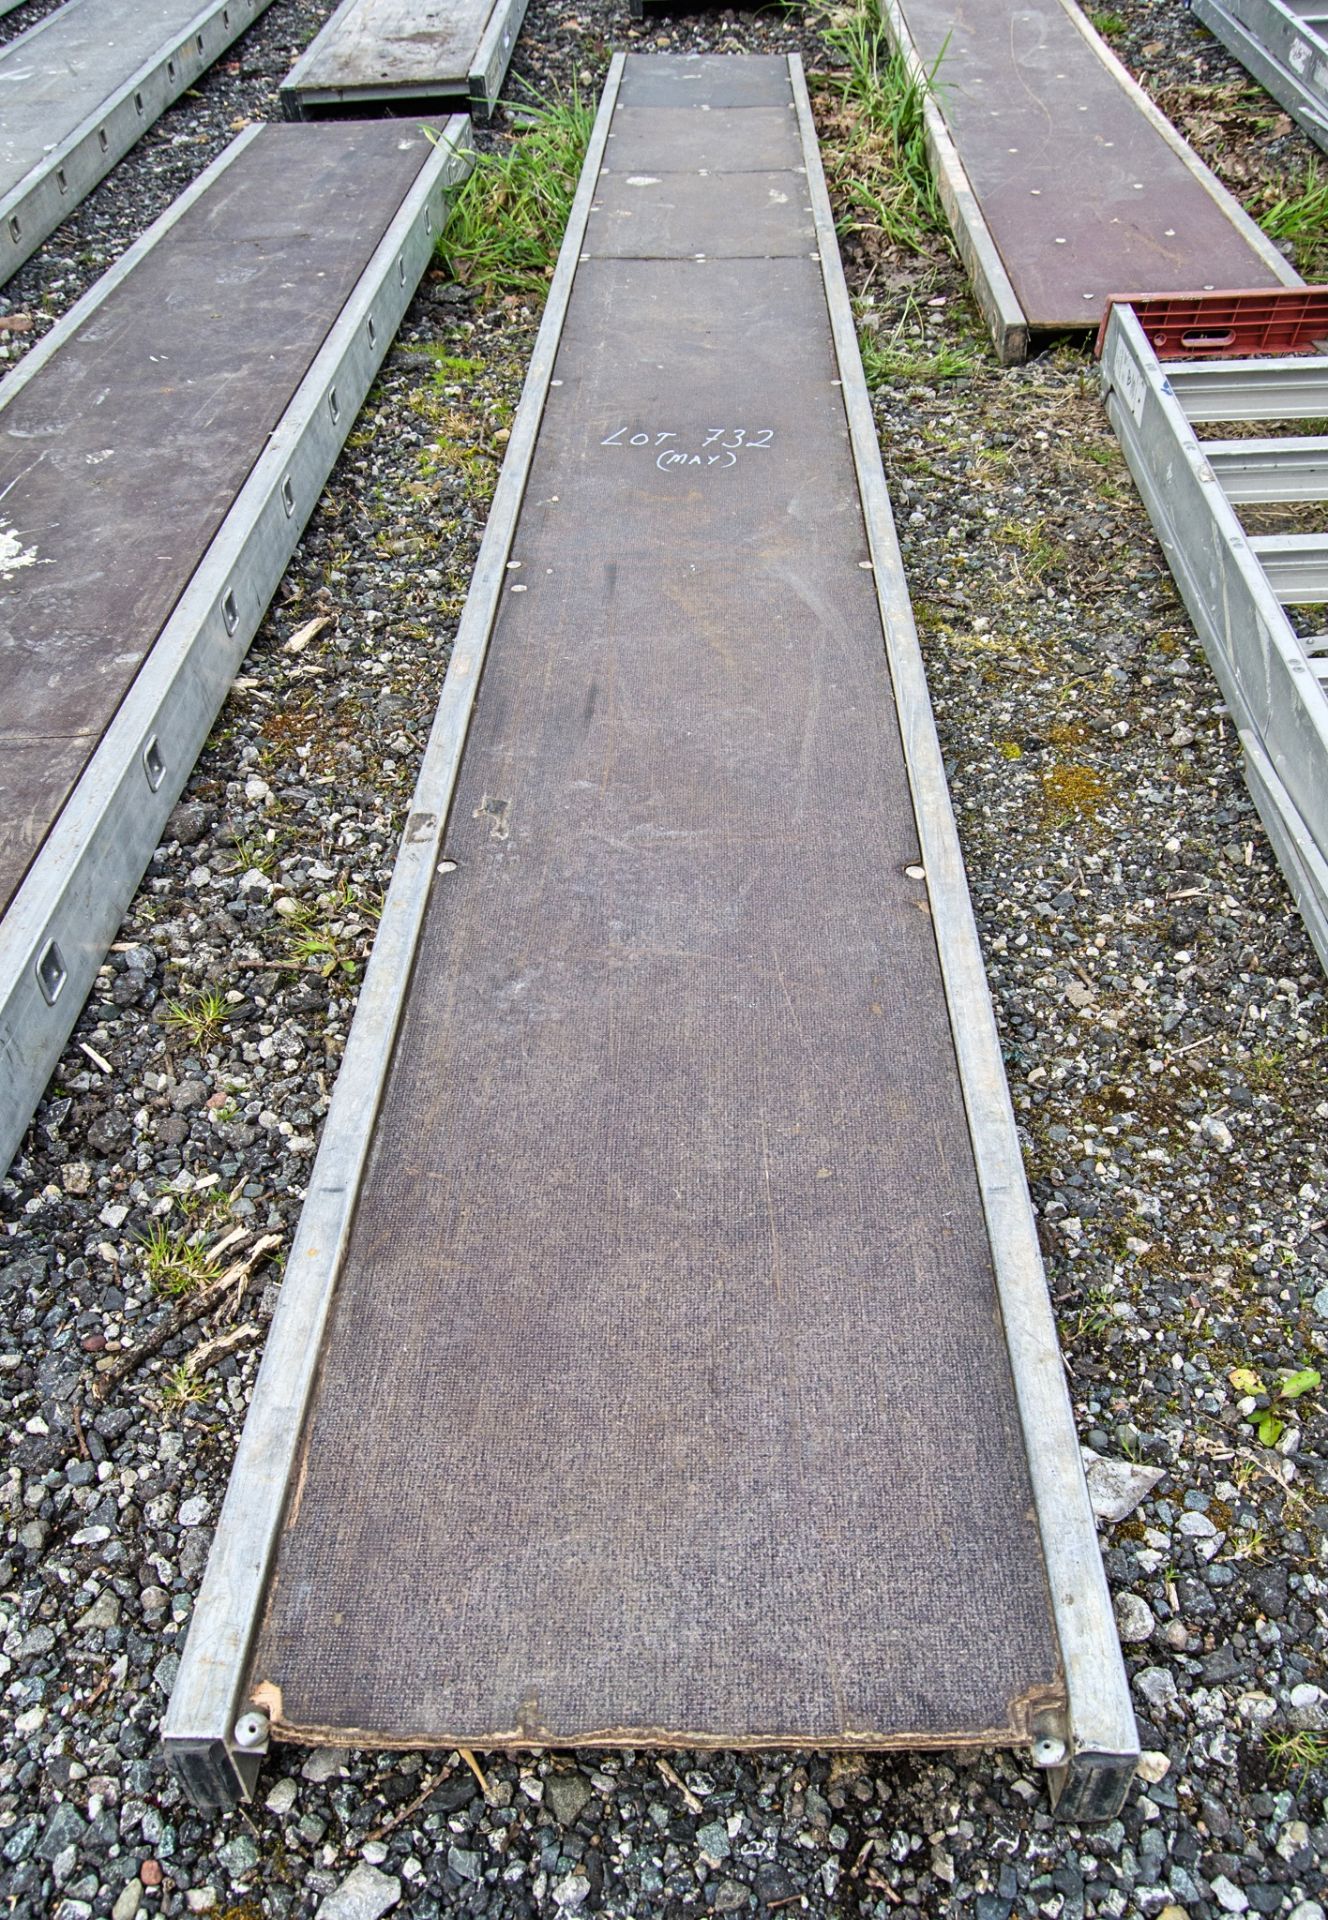 14ft aluminium staging board